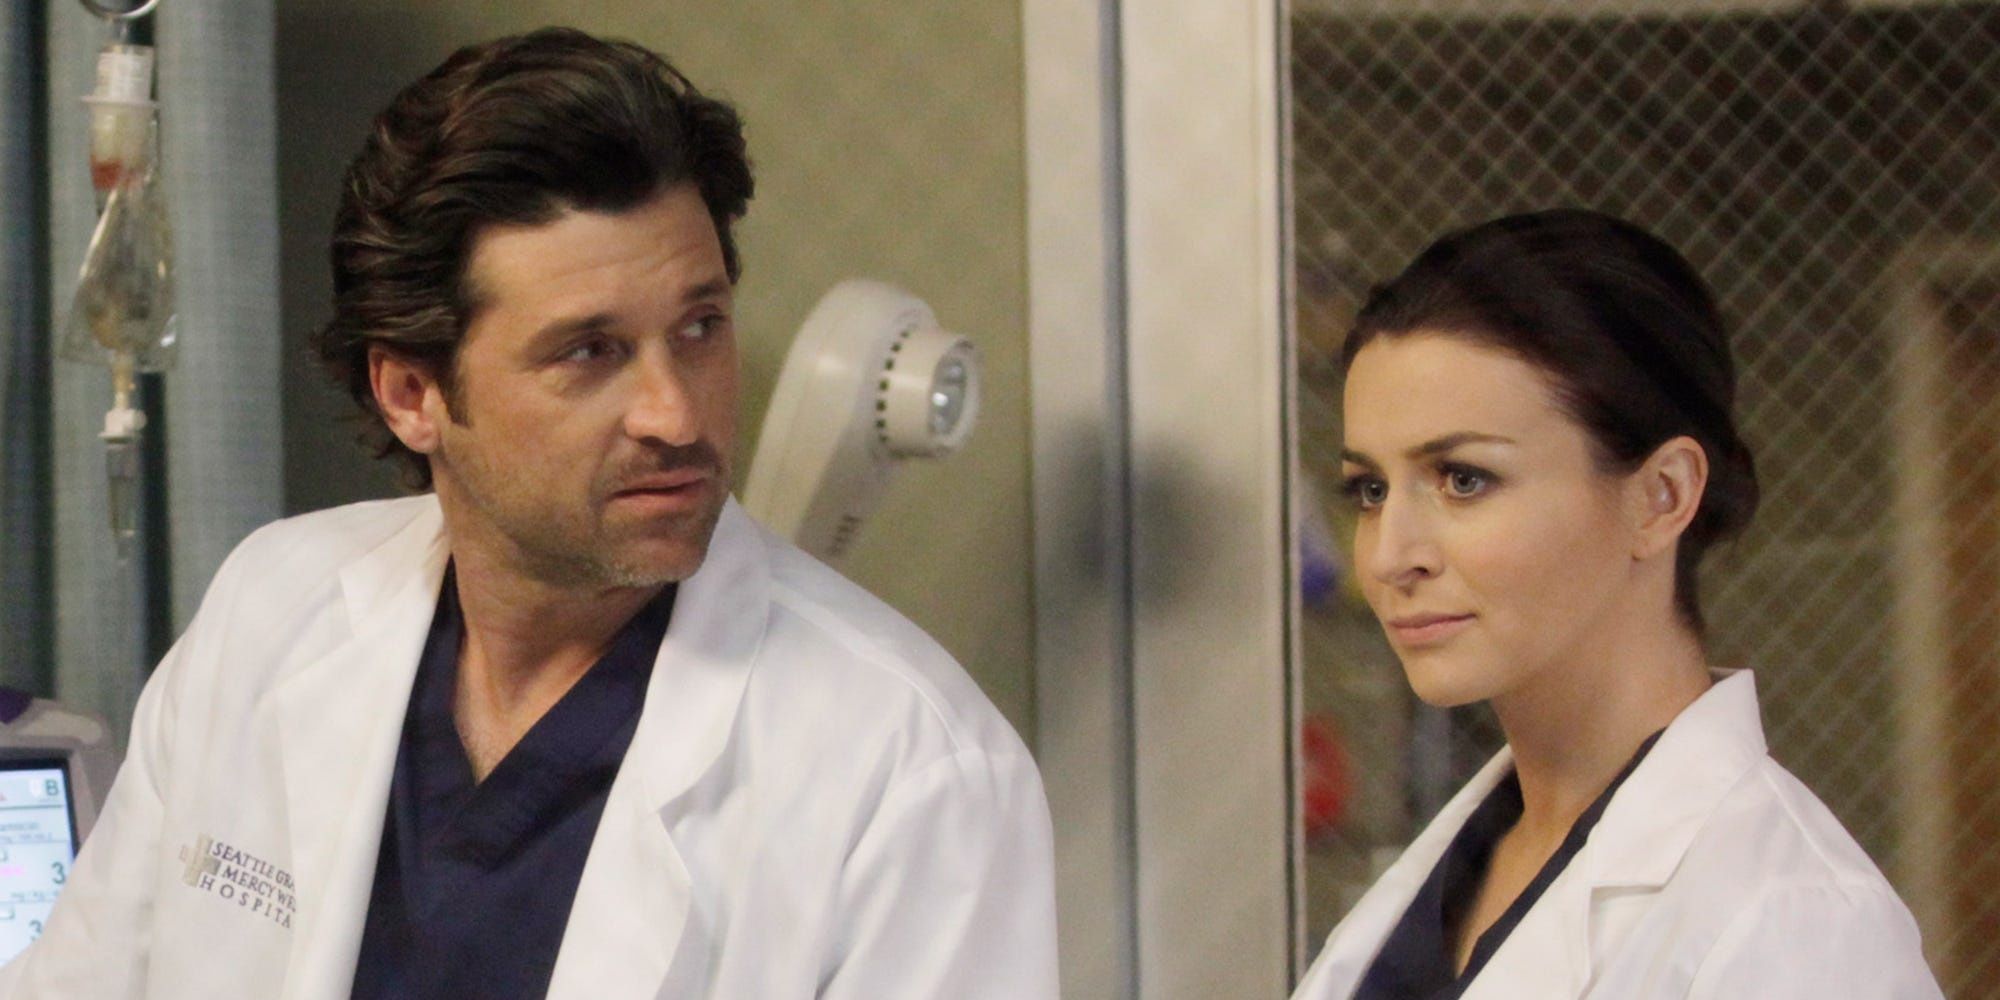 Derek with Amelia Shepherd at the hospital in Greys Anatomy